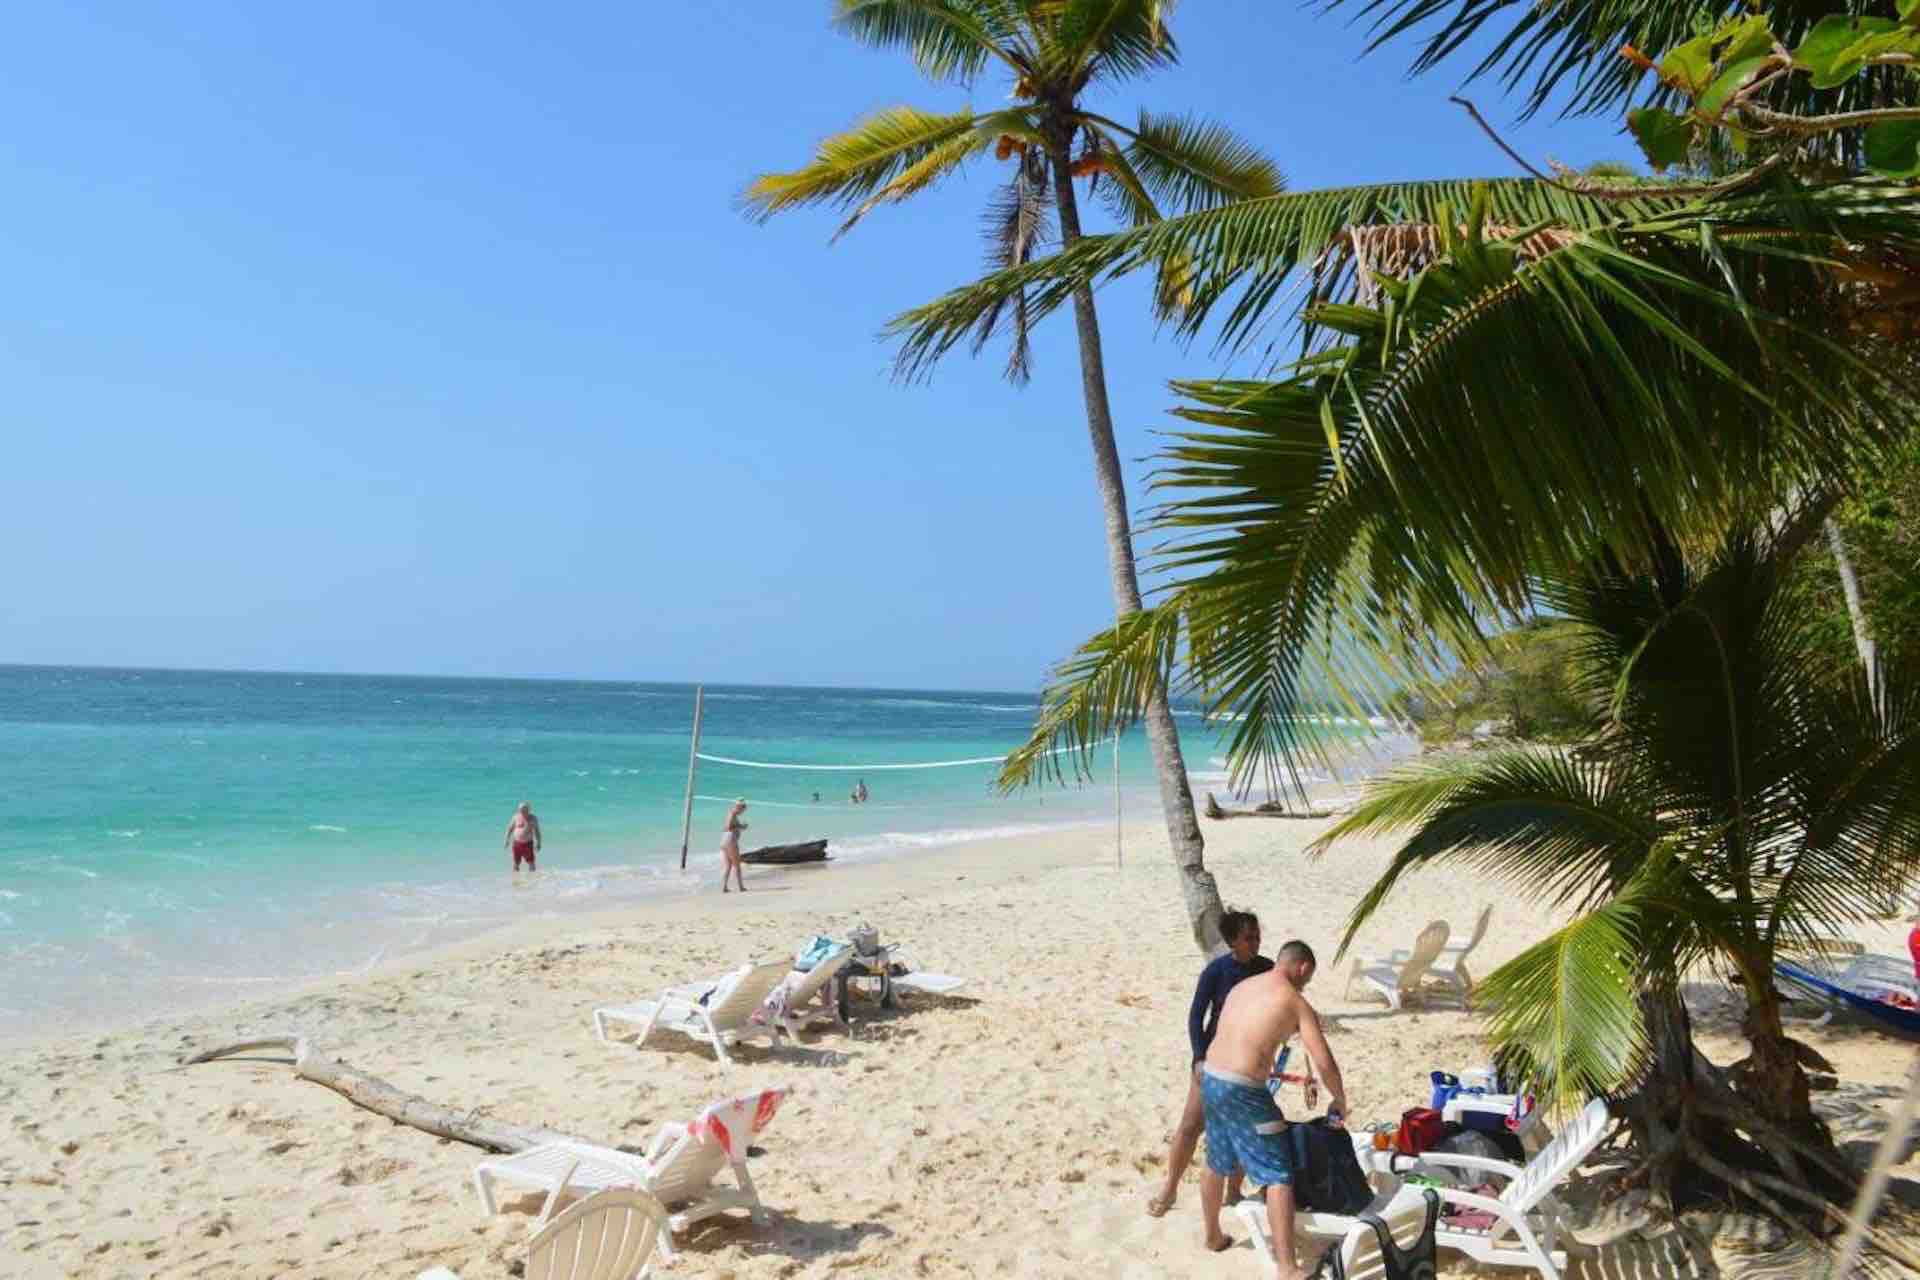 Sonny Island Resort Panama beach day